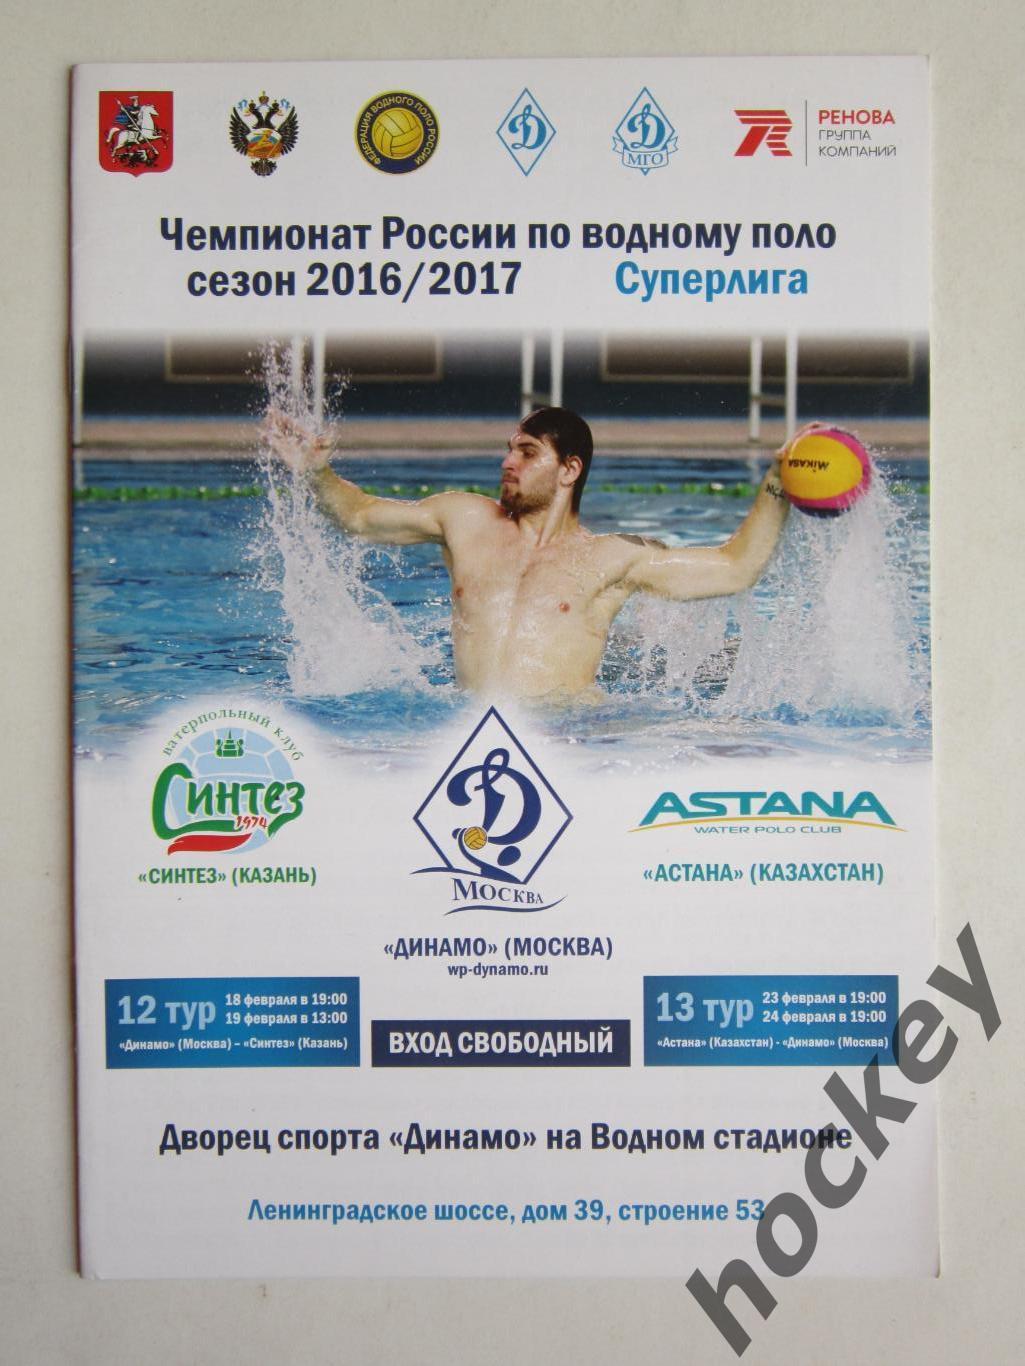 Динамо Москва - Синтез Казань, Астана Казахстан - Динамо Москва 18-24.02.2017